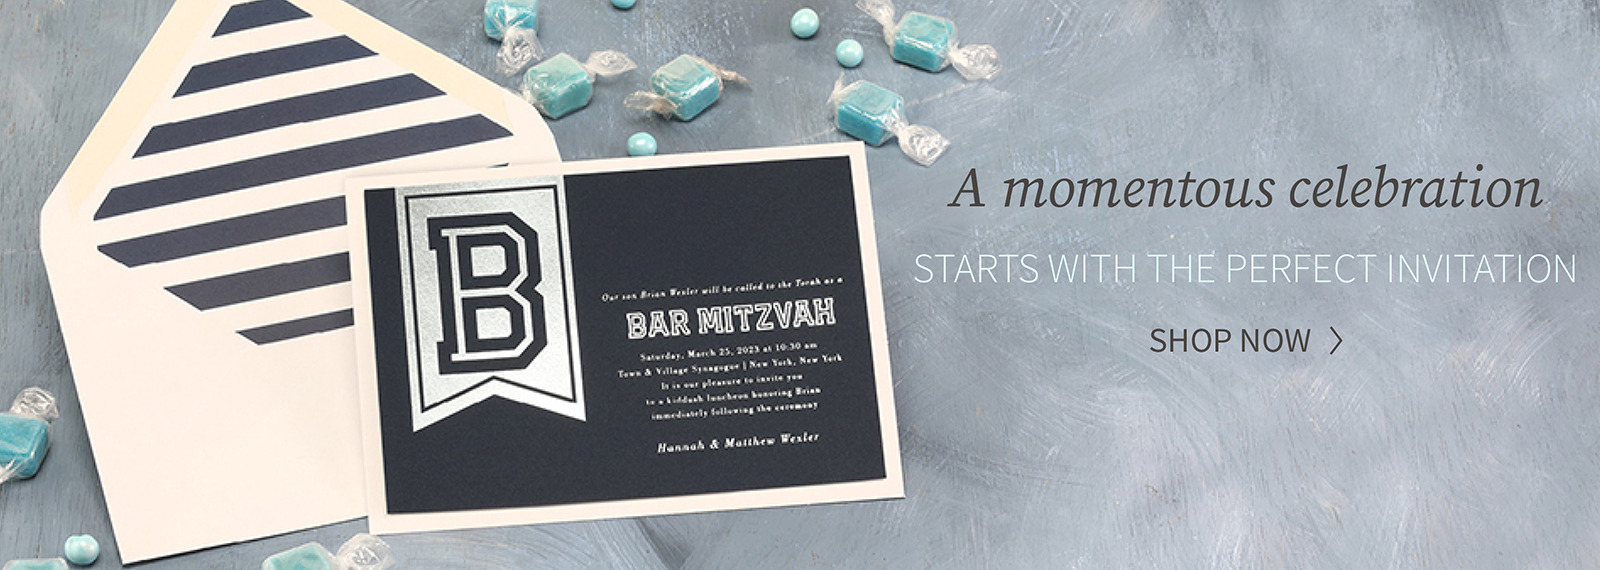 Bar & Bat Mitzvah Collection banner